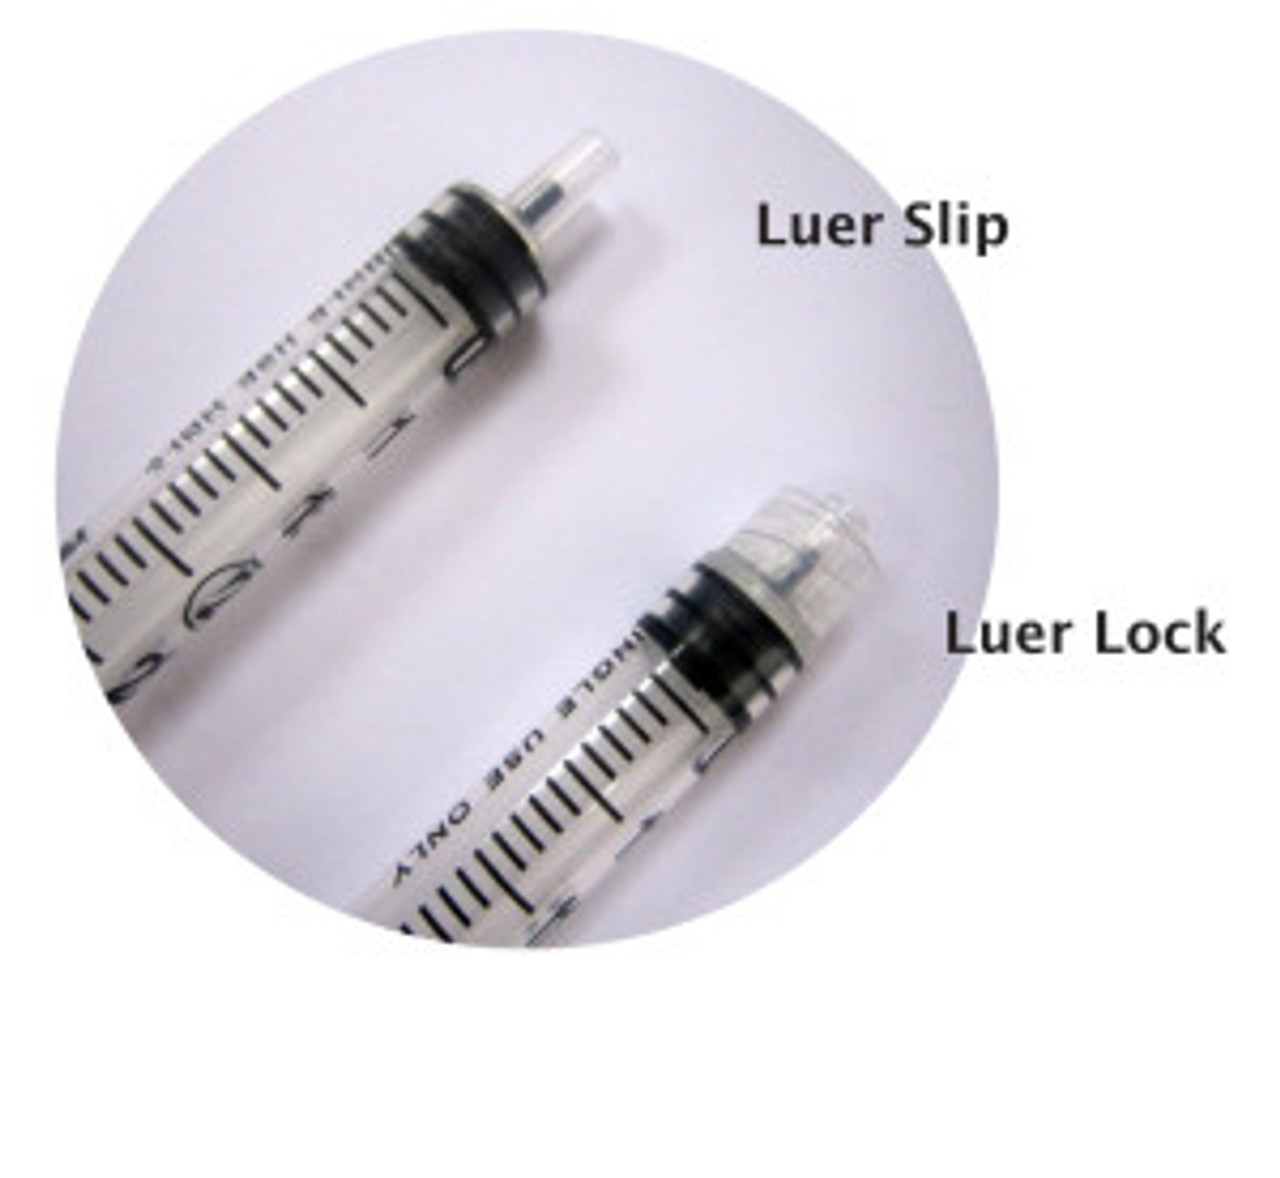 3cc Syringe/Needle Combination with Luer-Lock Tip, 22G x 1, Black